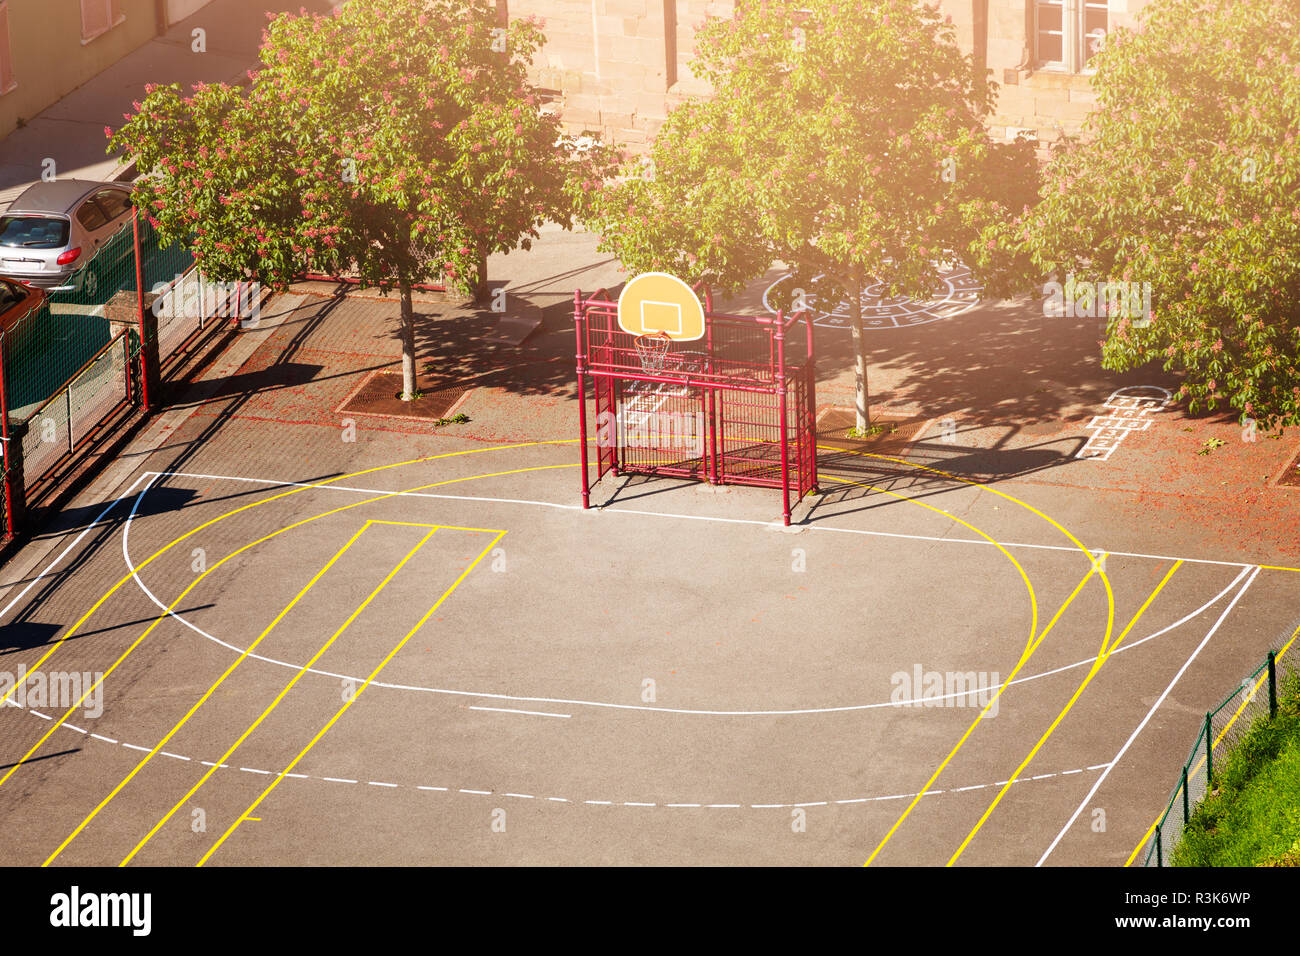 Multi sport game court at school backyard Stock Photo